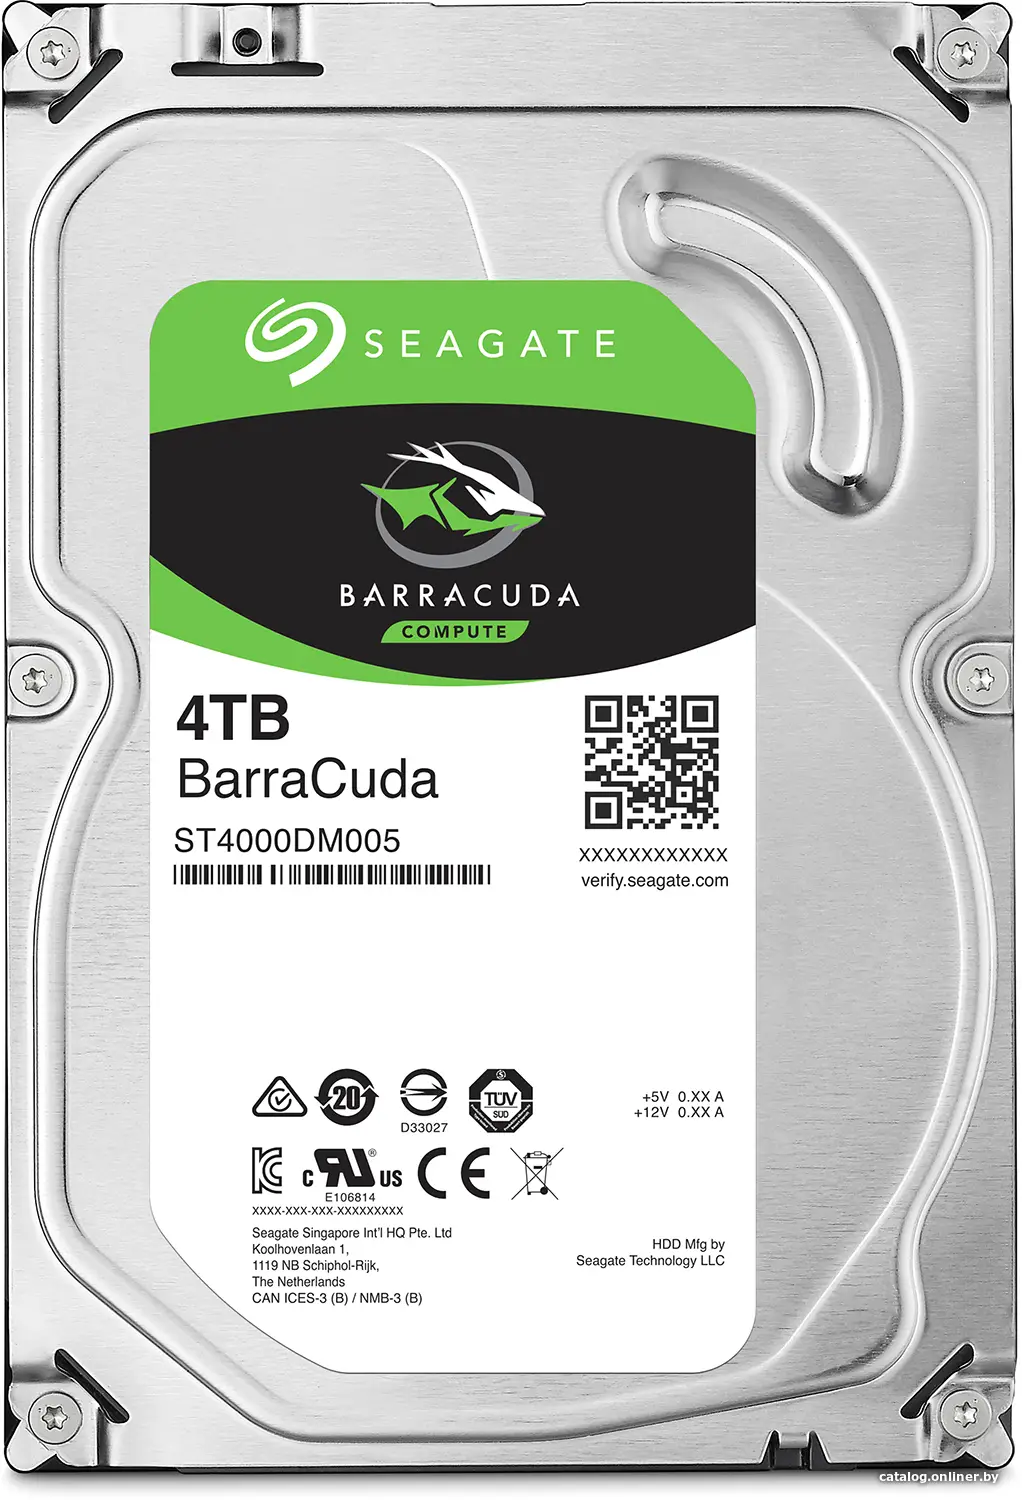 Купить Seagate 4TB BarraCuda [ST4000DM004], цена, опт и розница